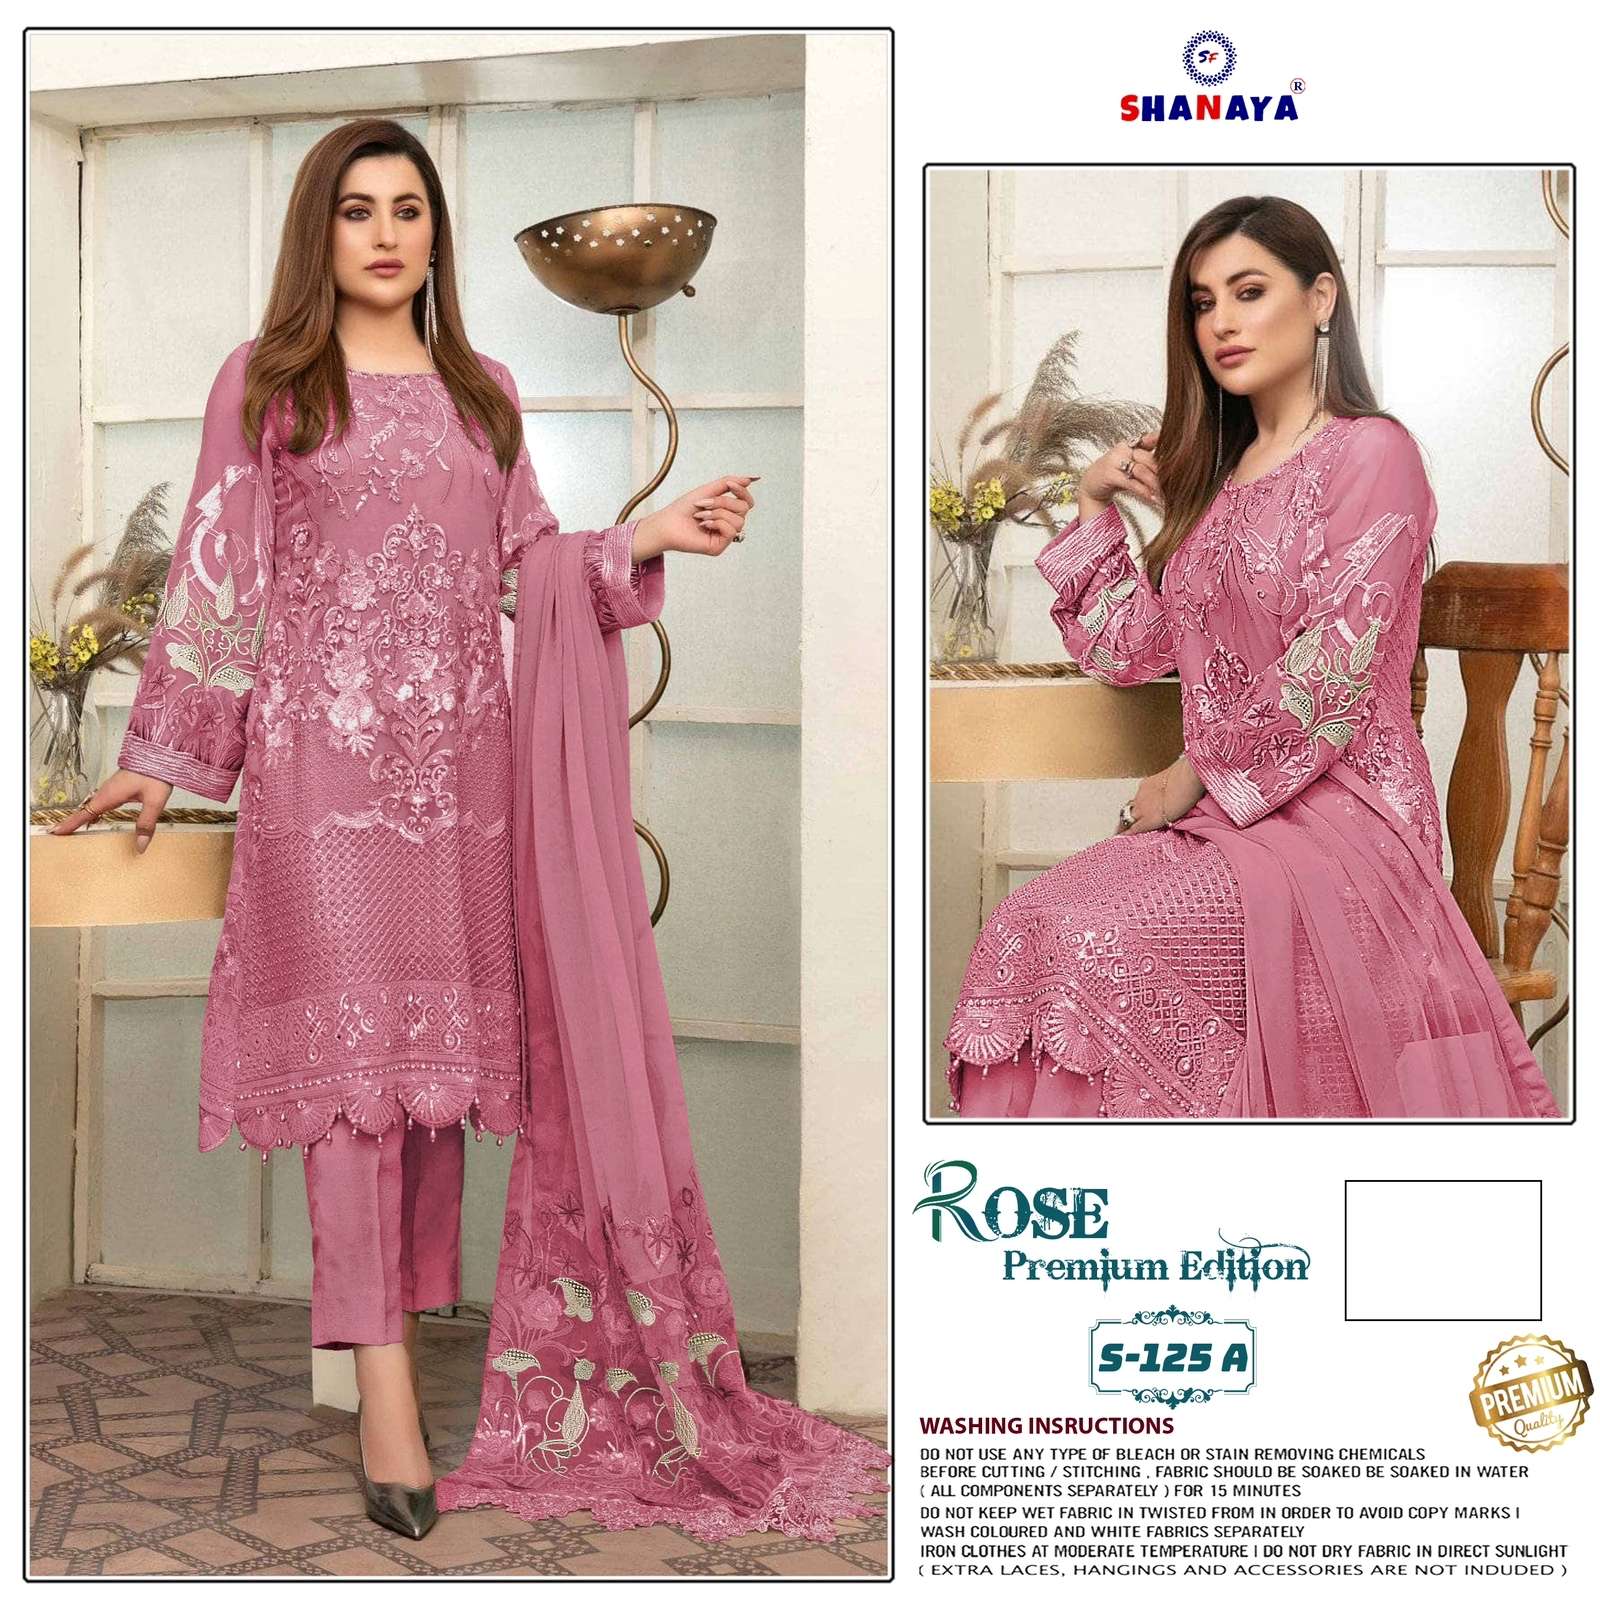 shanaya rose premium s 125 design colors pakistani dresses 